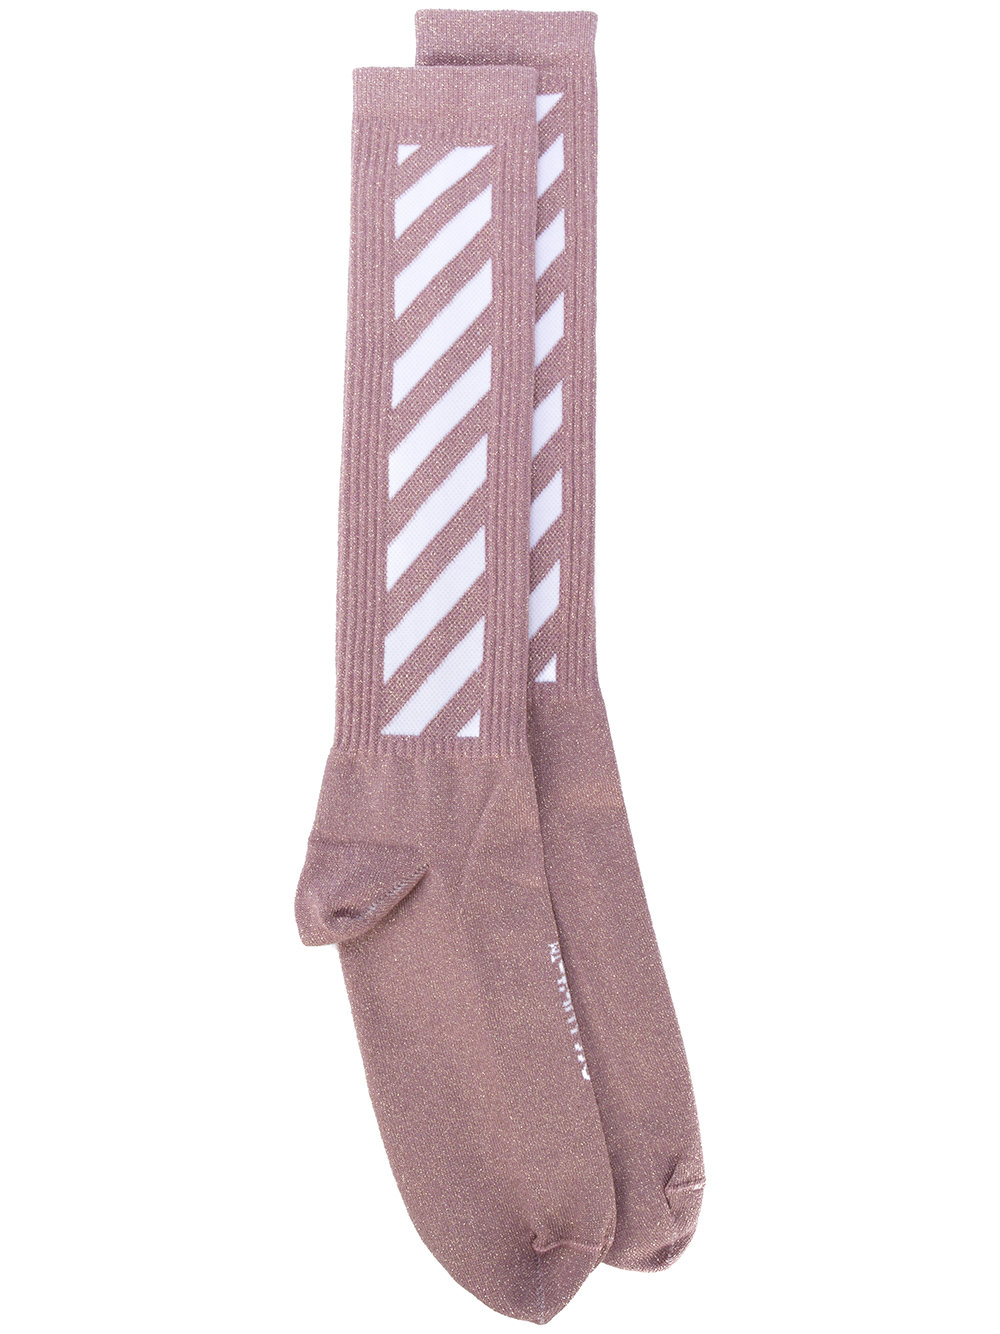 Мода. Носки. OFF-WHITE diagonal stripes socks, 4 684 ₽